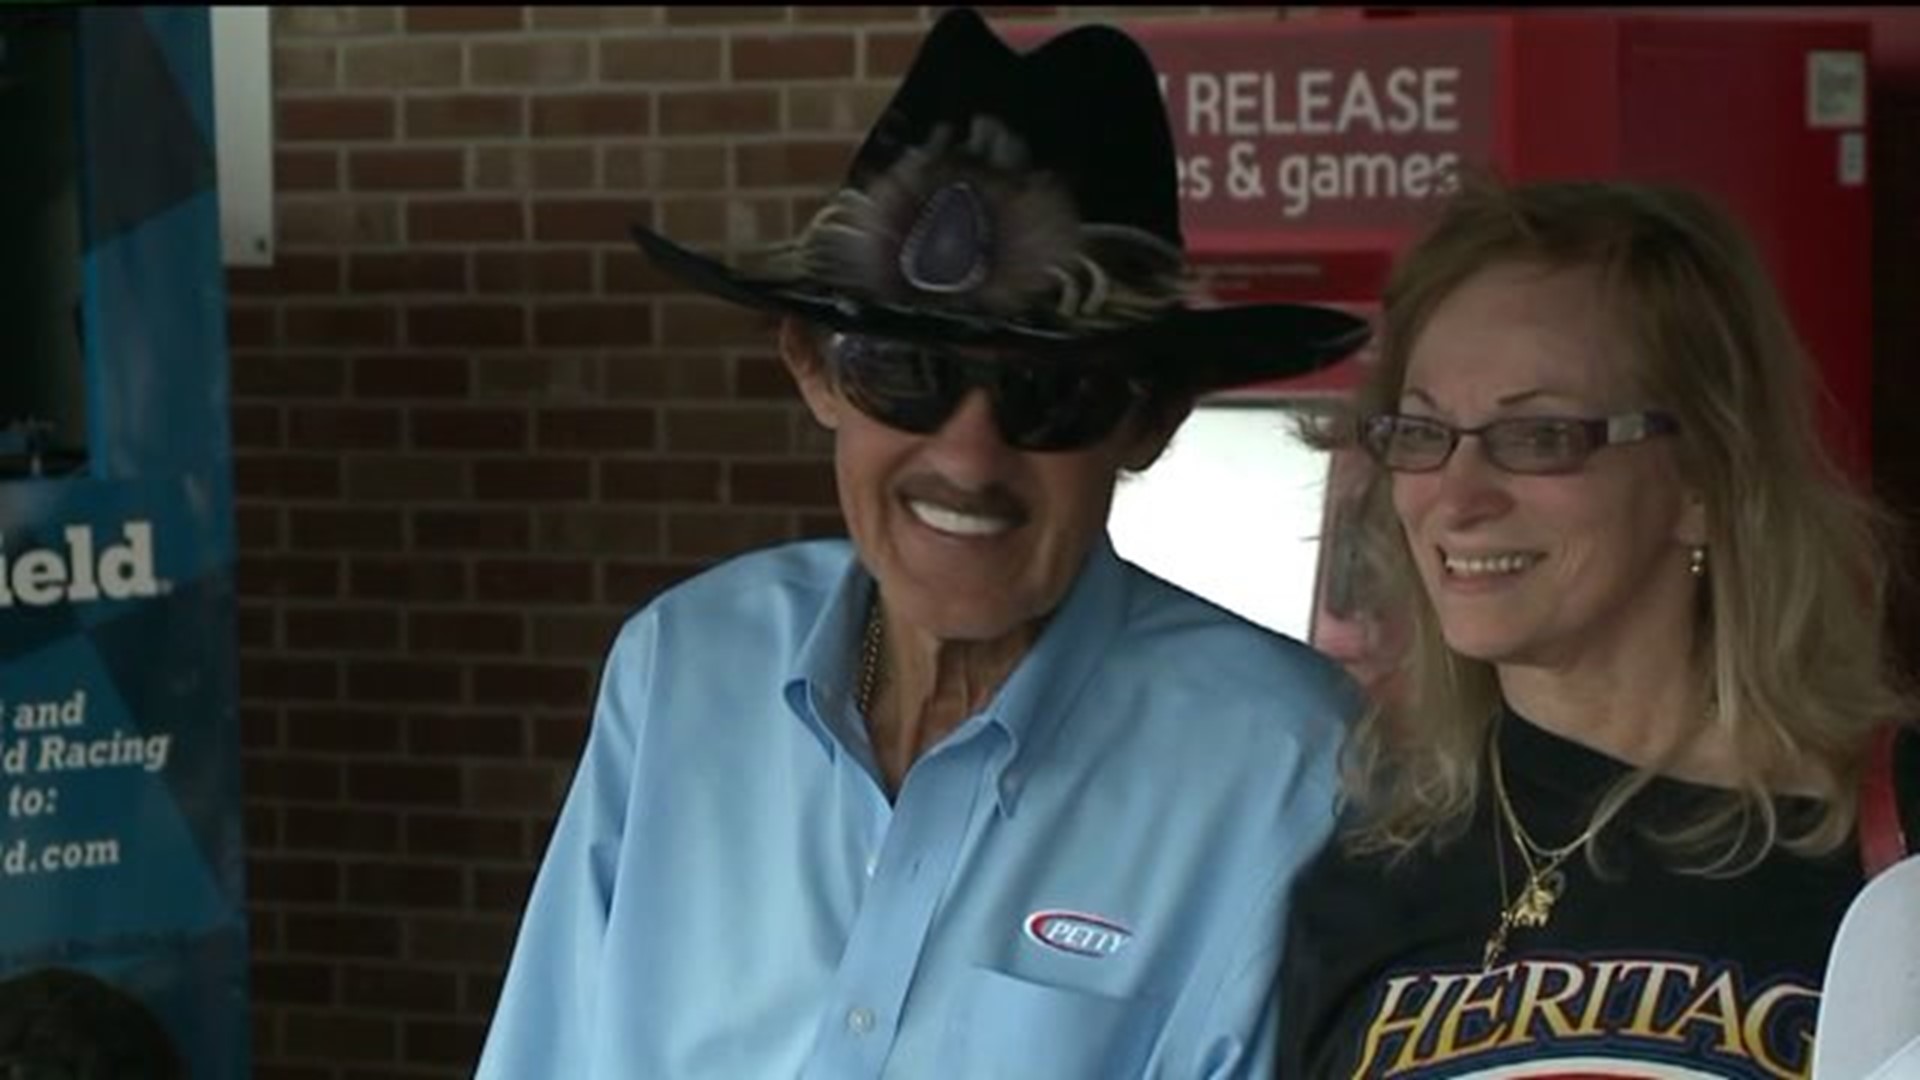 Racing Legend Brings Big Donation to Food Bank